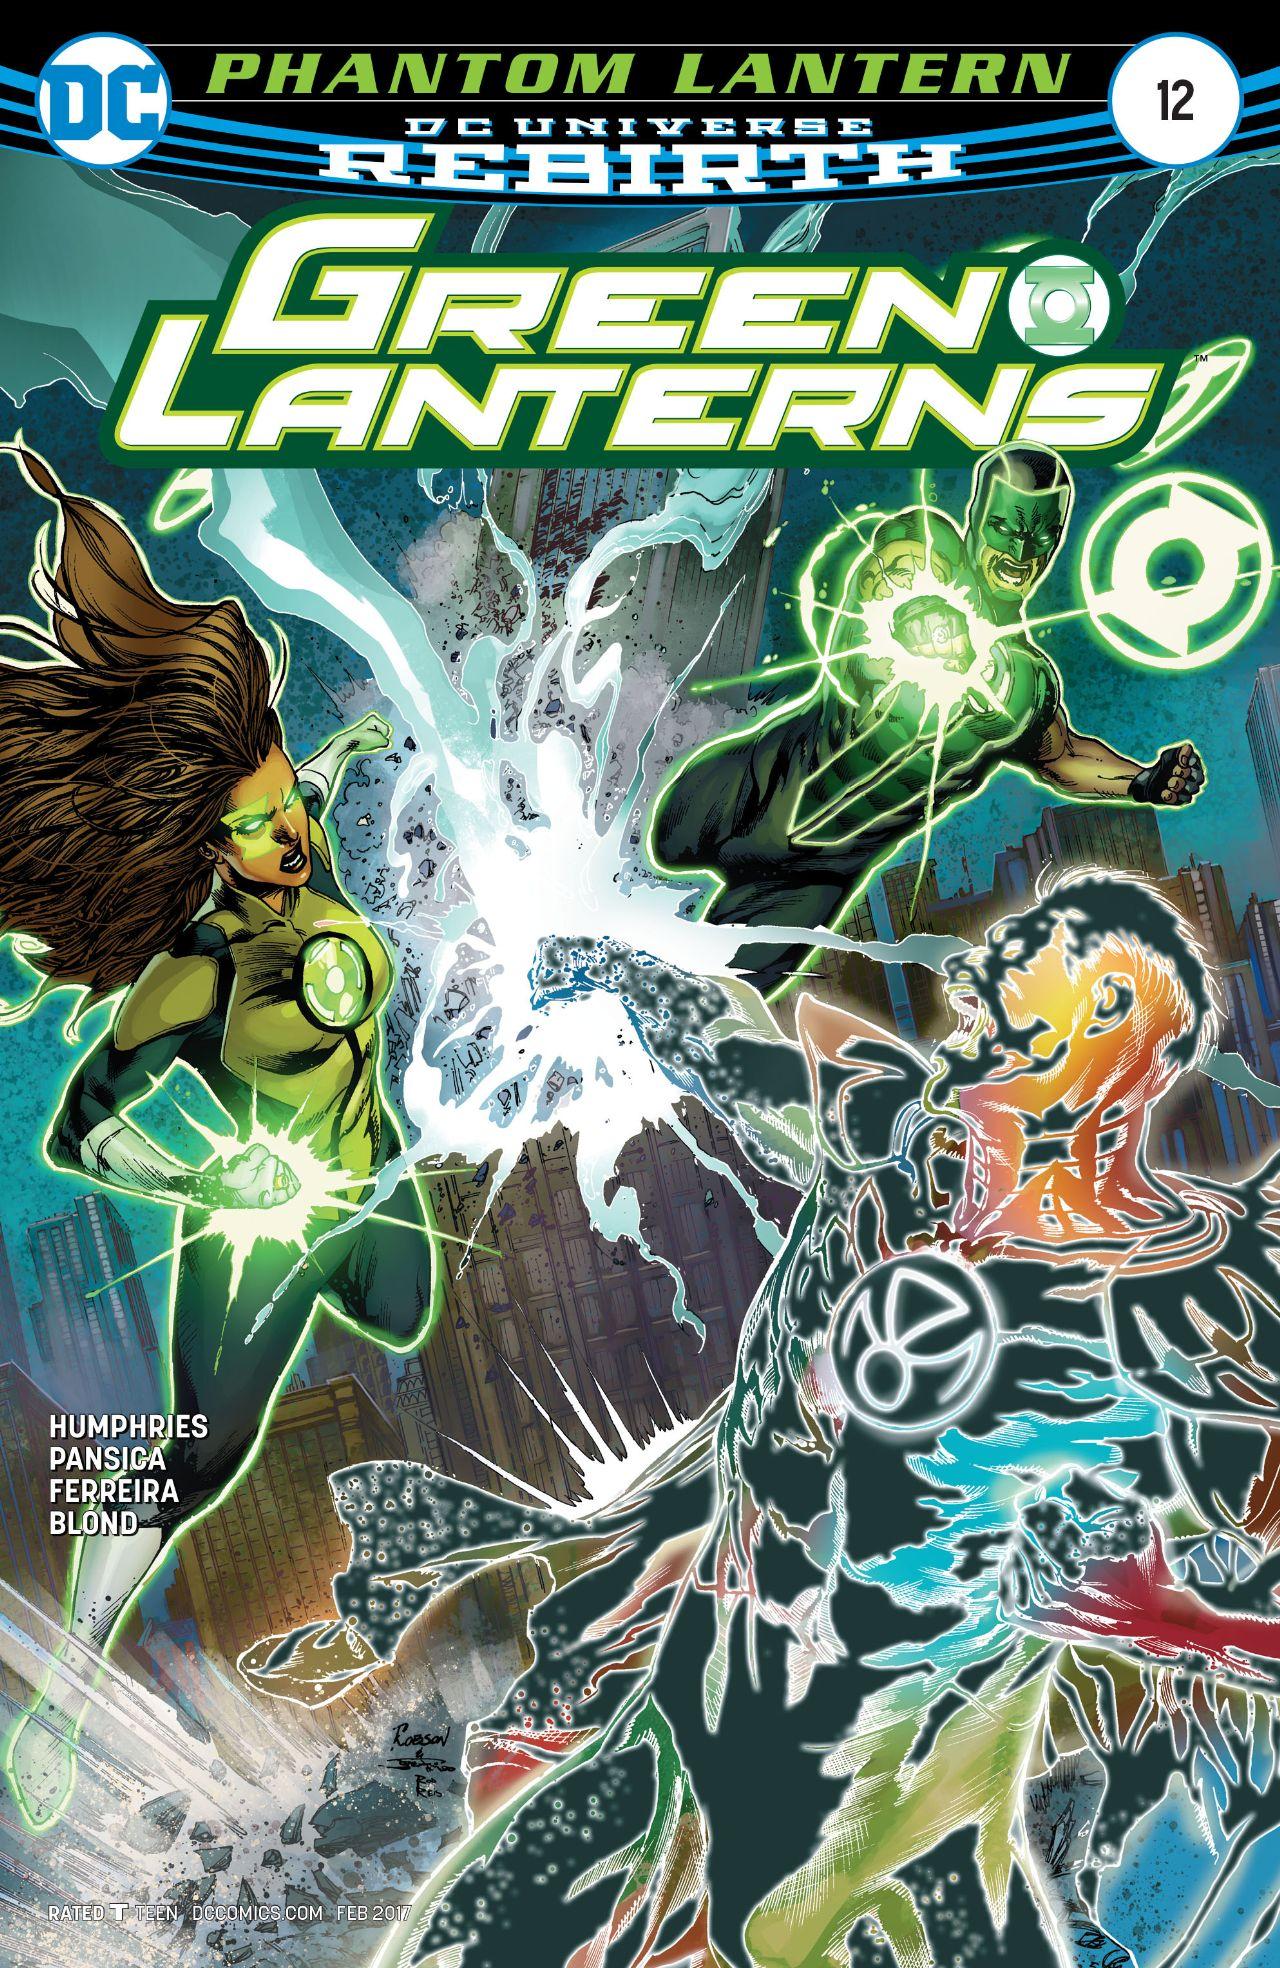 Green Lanterns Vol. 1 #12